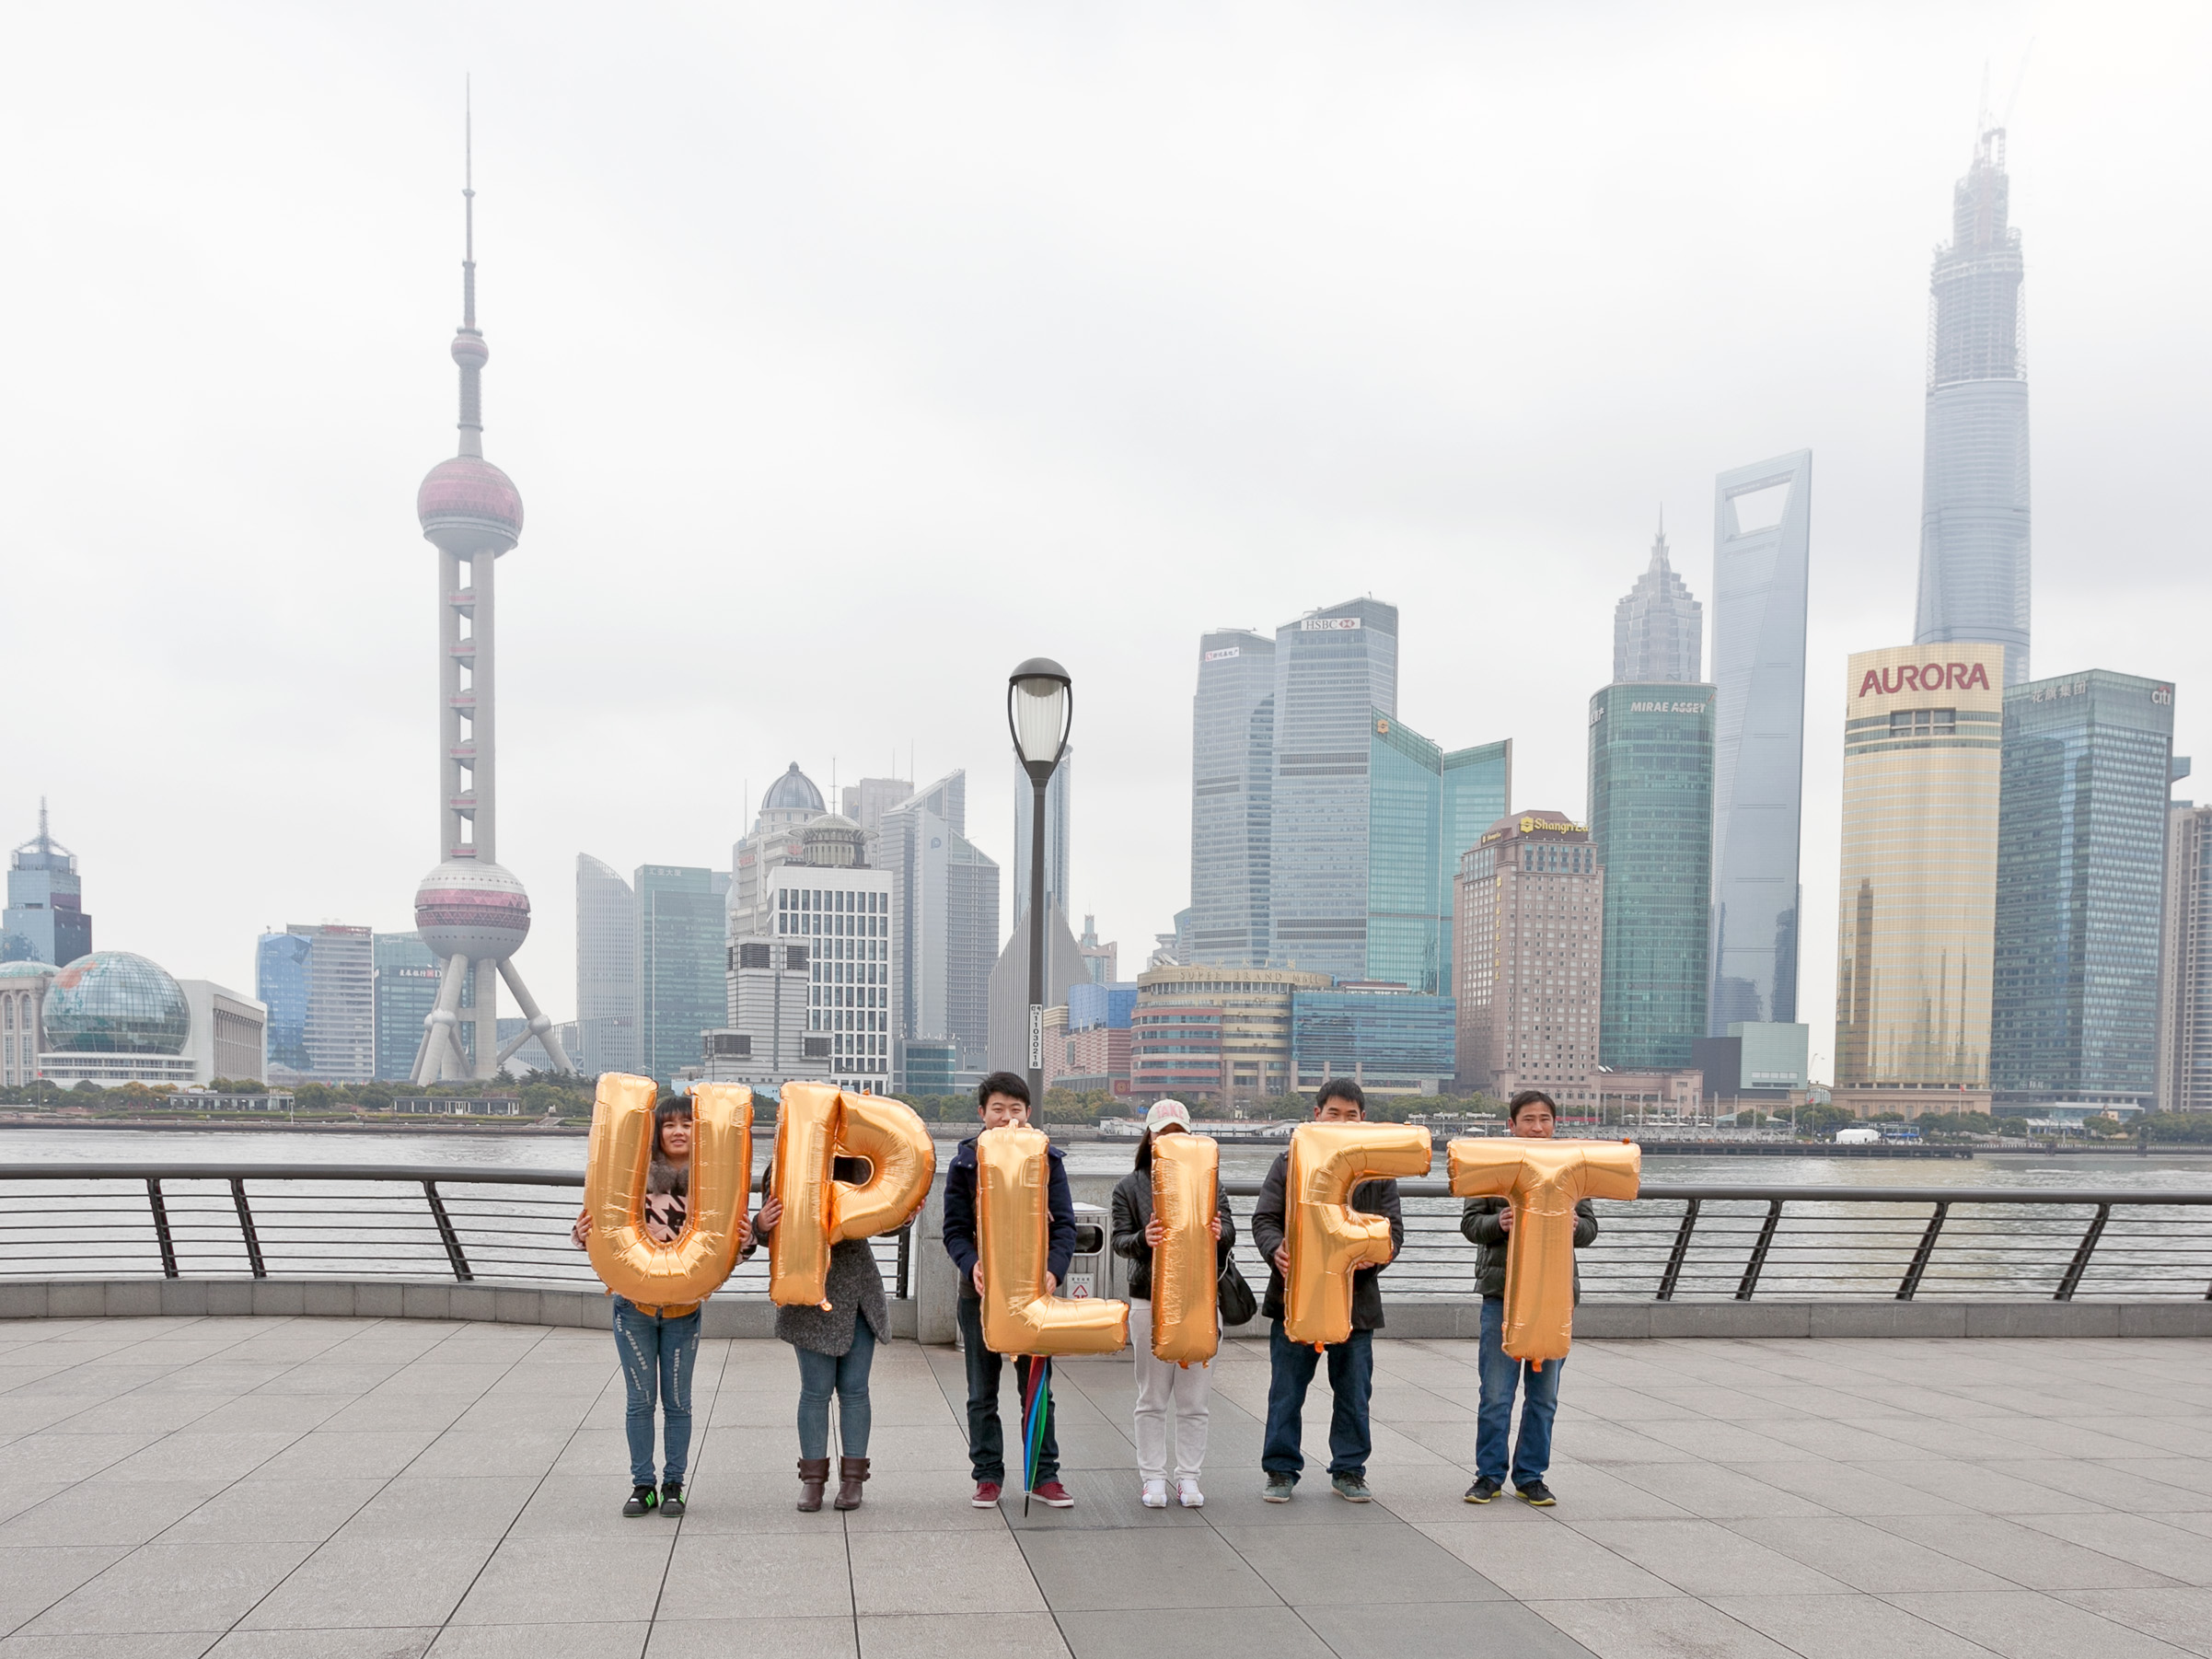 China, Shanghai, The Bund (外滩) - Uplift, Silence Was Golden, gold balloons